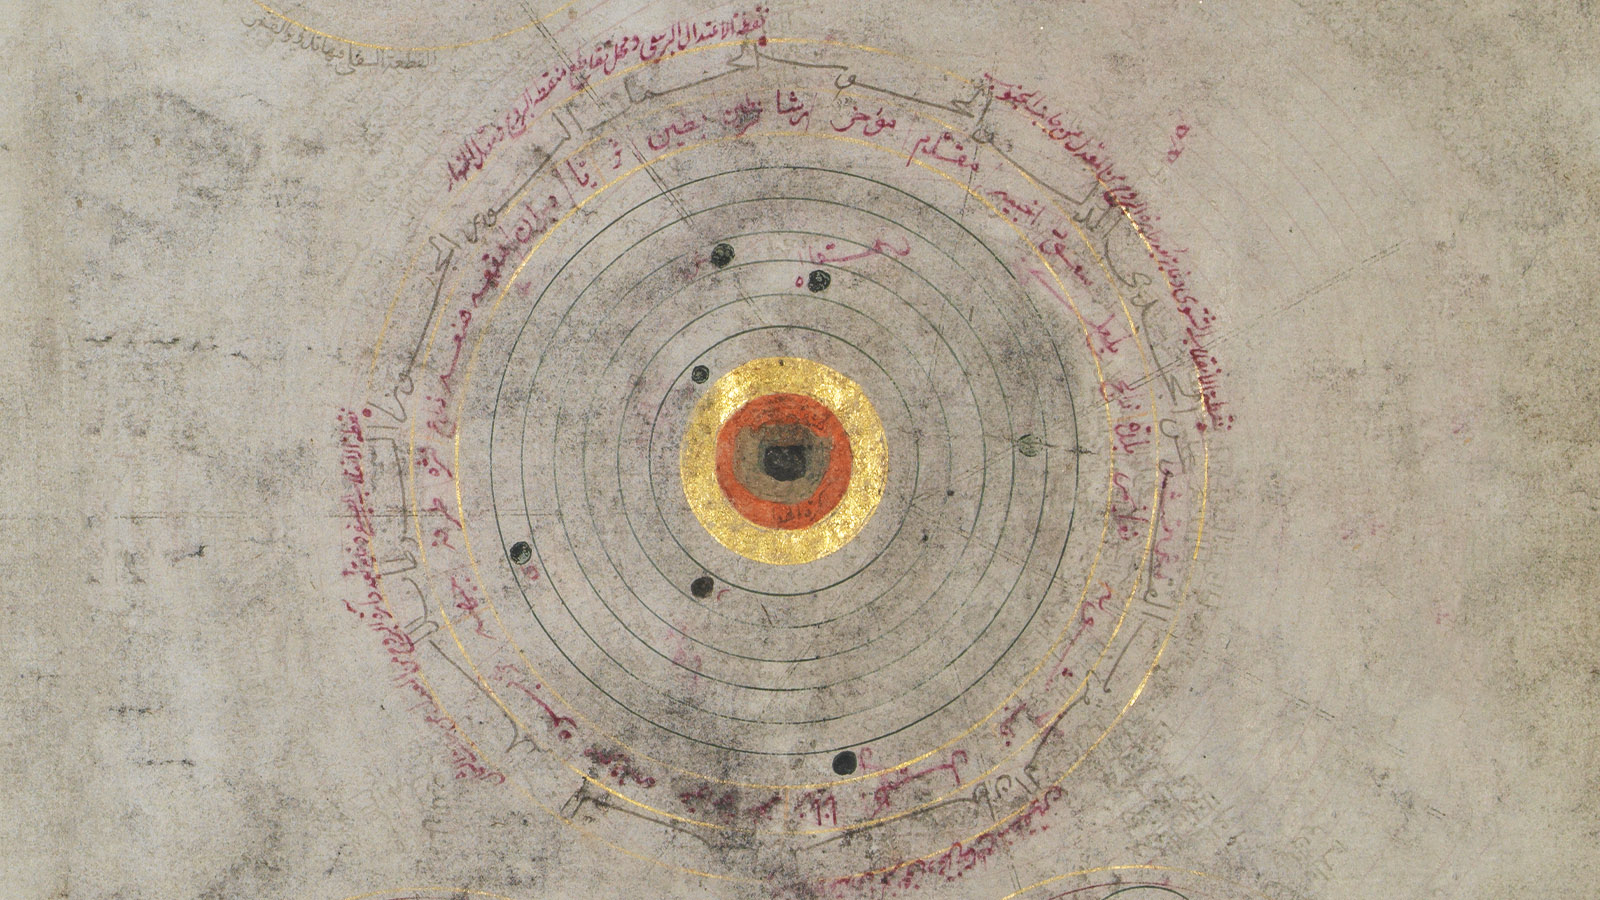 ‘The Emperor’s Gift: Circles of the Sciences and Tables of the Figures’ (Tuḥfat al-Khāqān:Dawāʾir al-ʿulūm wa-jadāwil al-ruqūm), fol. 20v (detail). Calouste Gulbenkian Museum